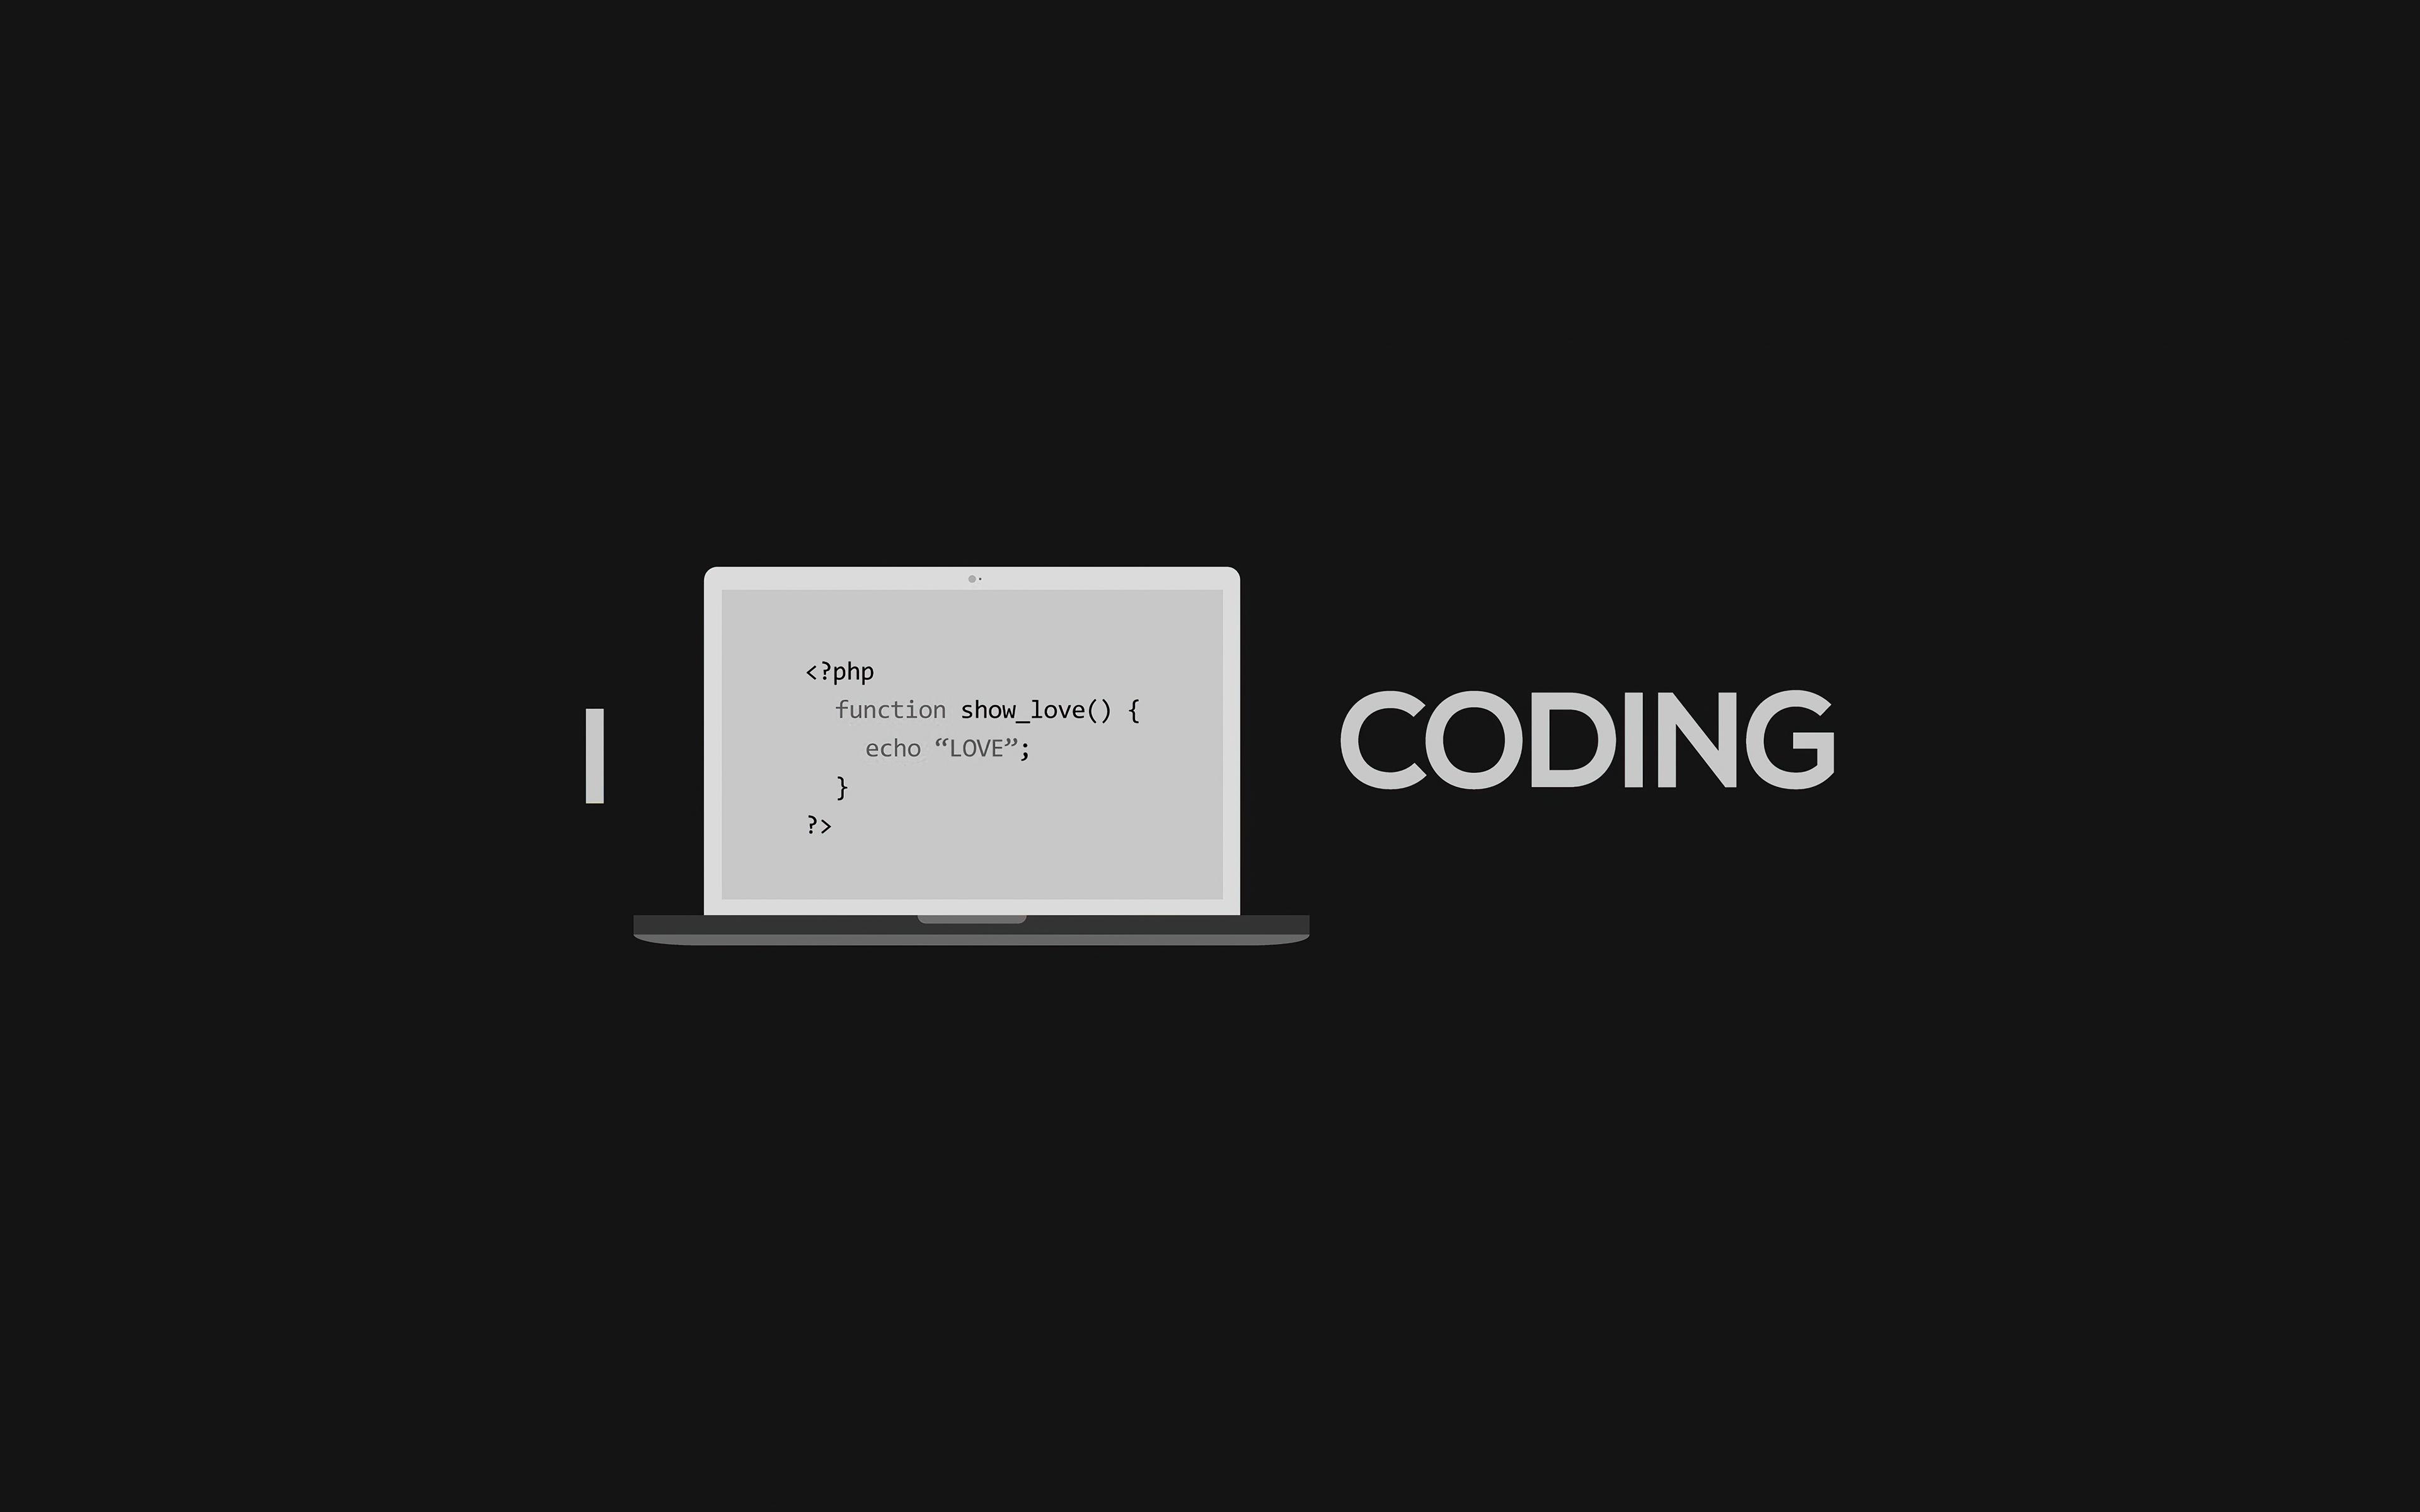 Coding wallpaper (simple)